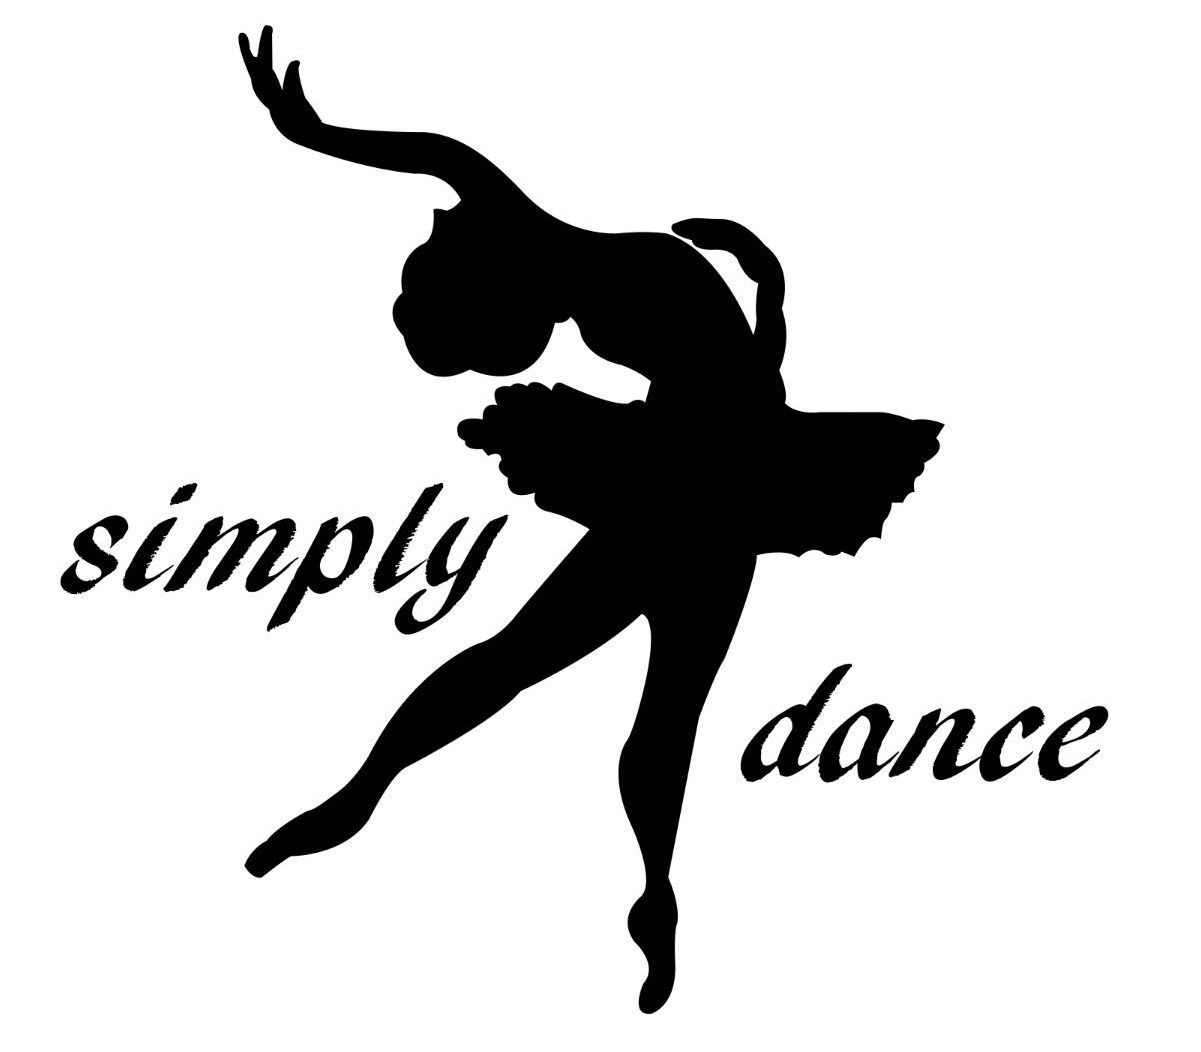 Simply Dance